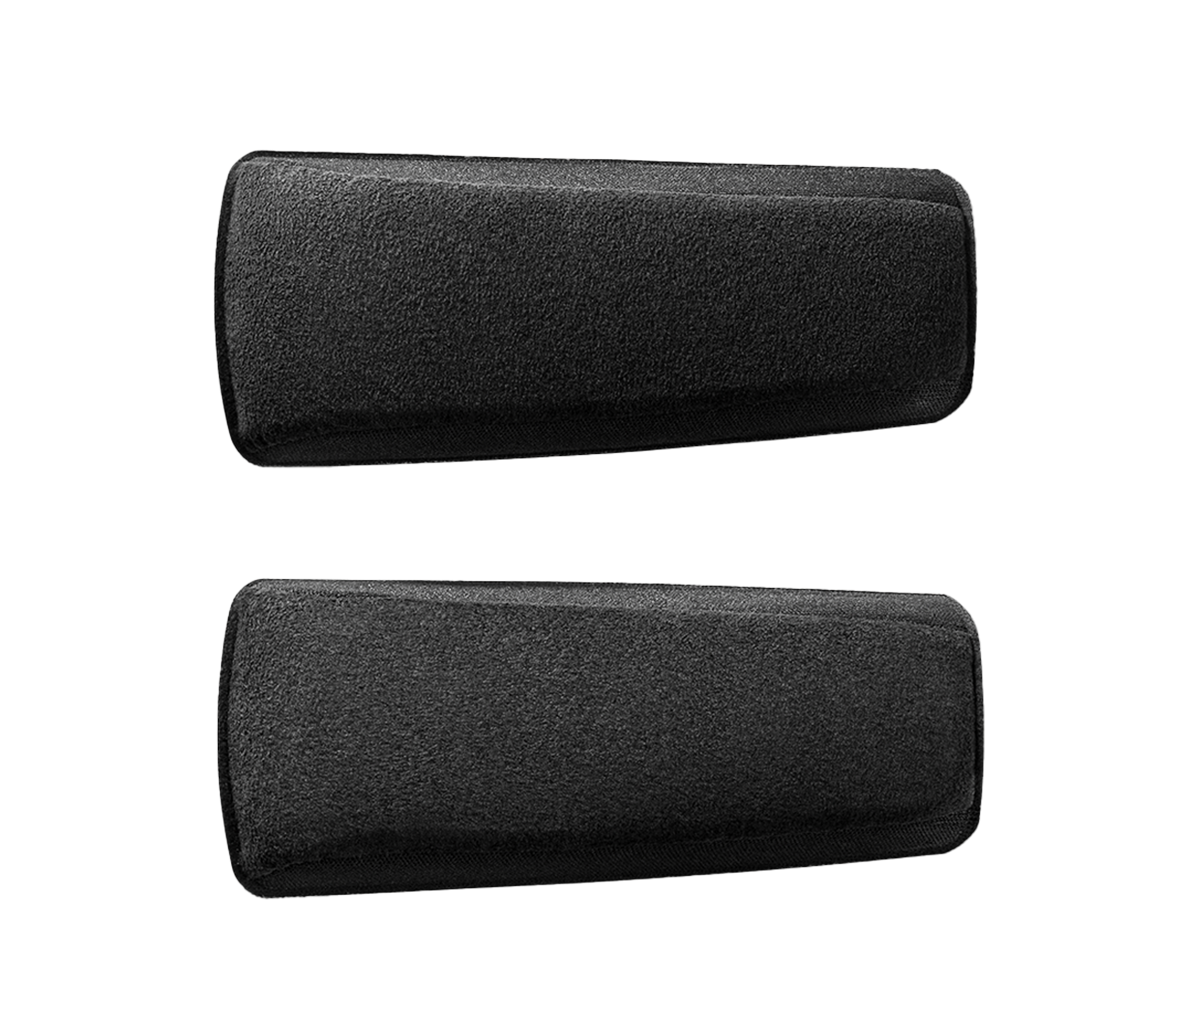 Bose A30 Headband Cushion Kit Black